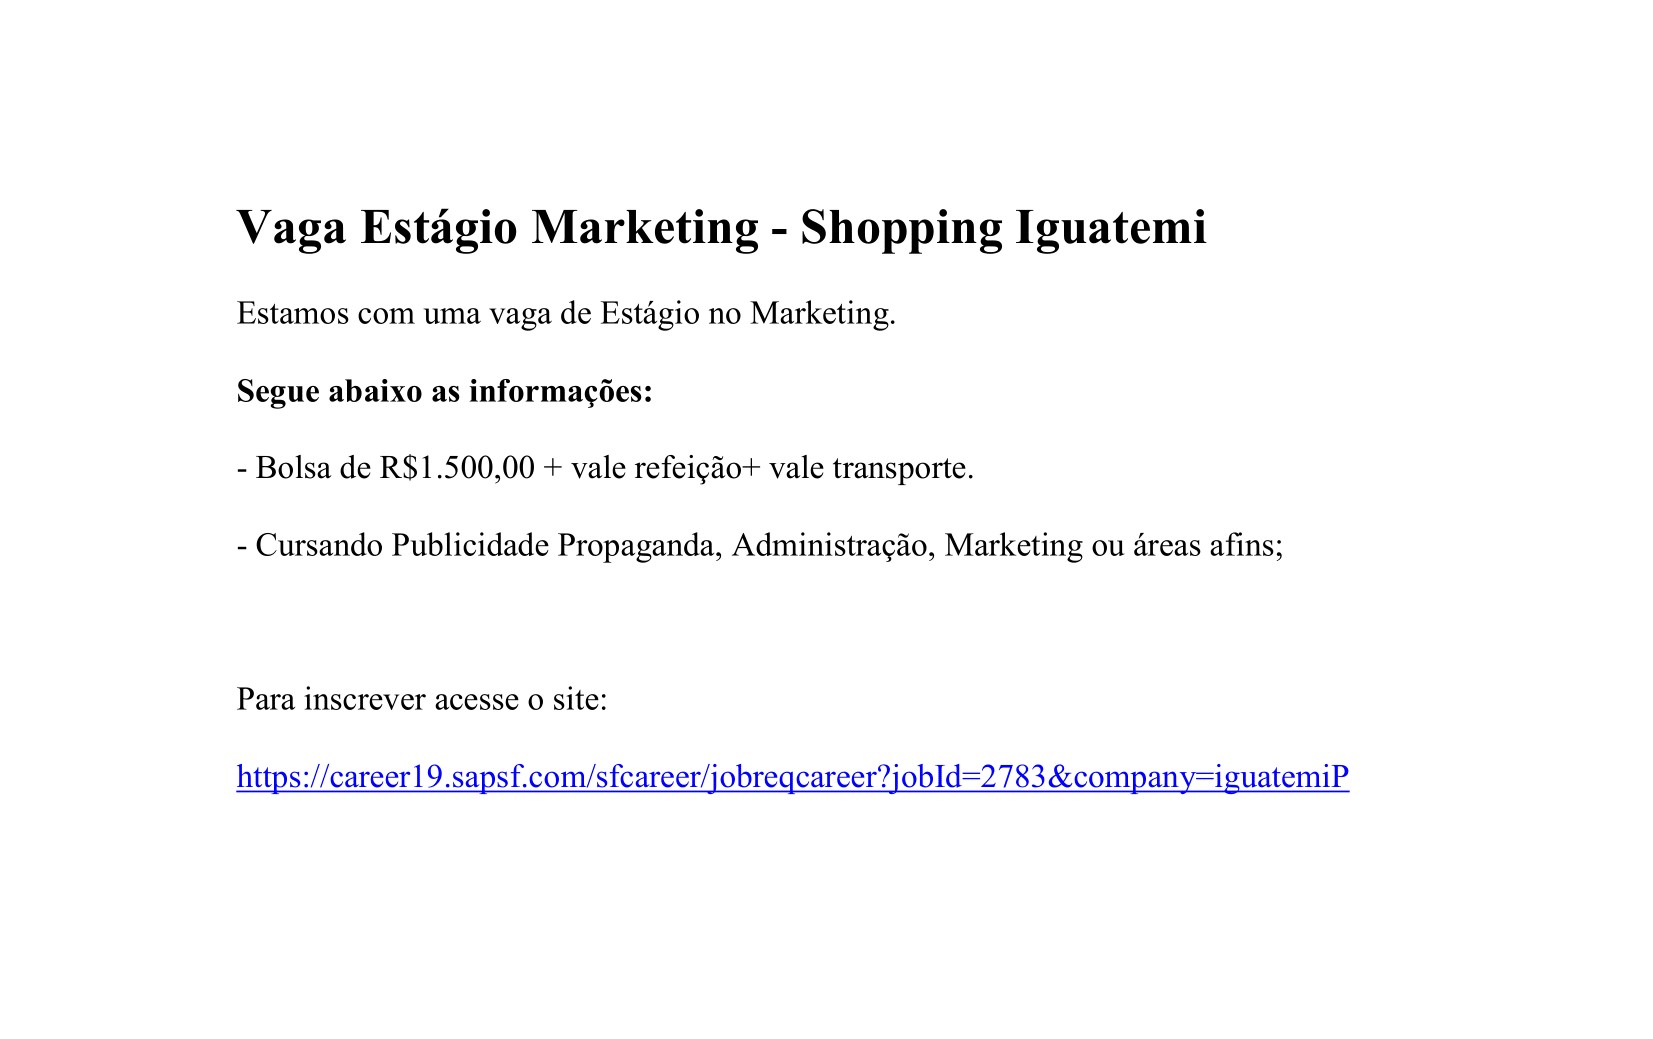 Shopping_Iguatemi-1.jpg